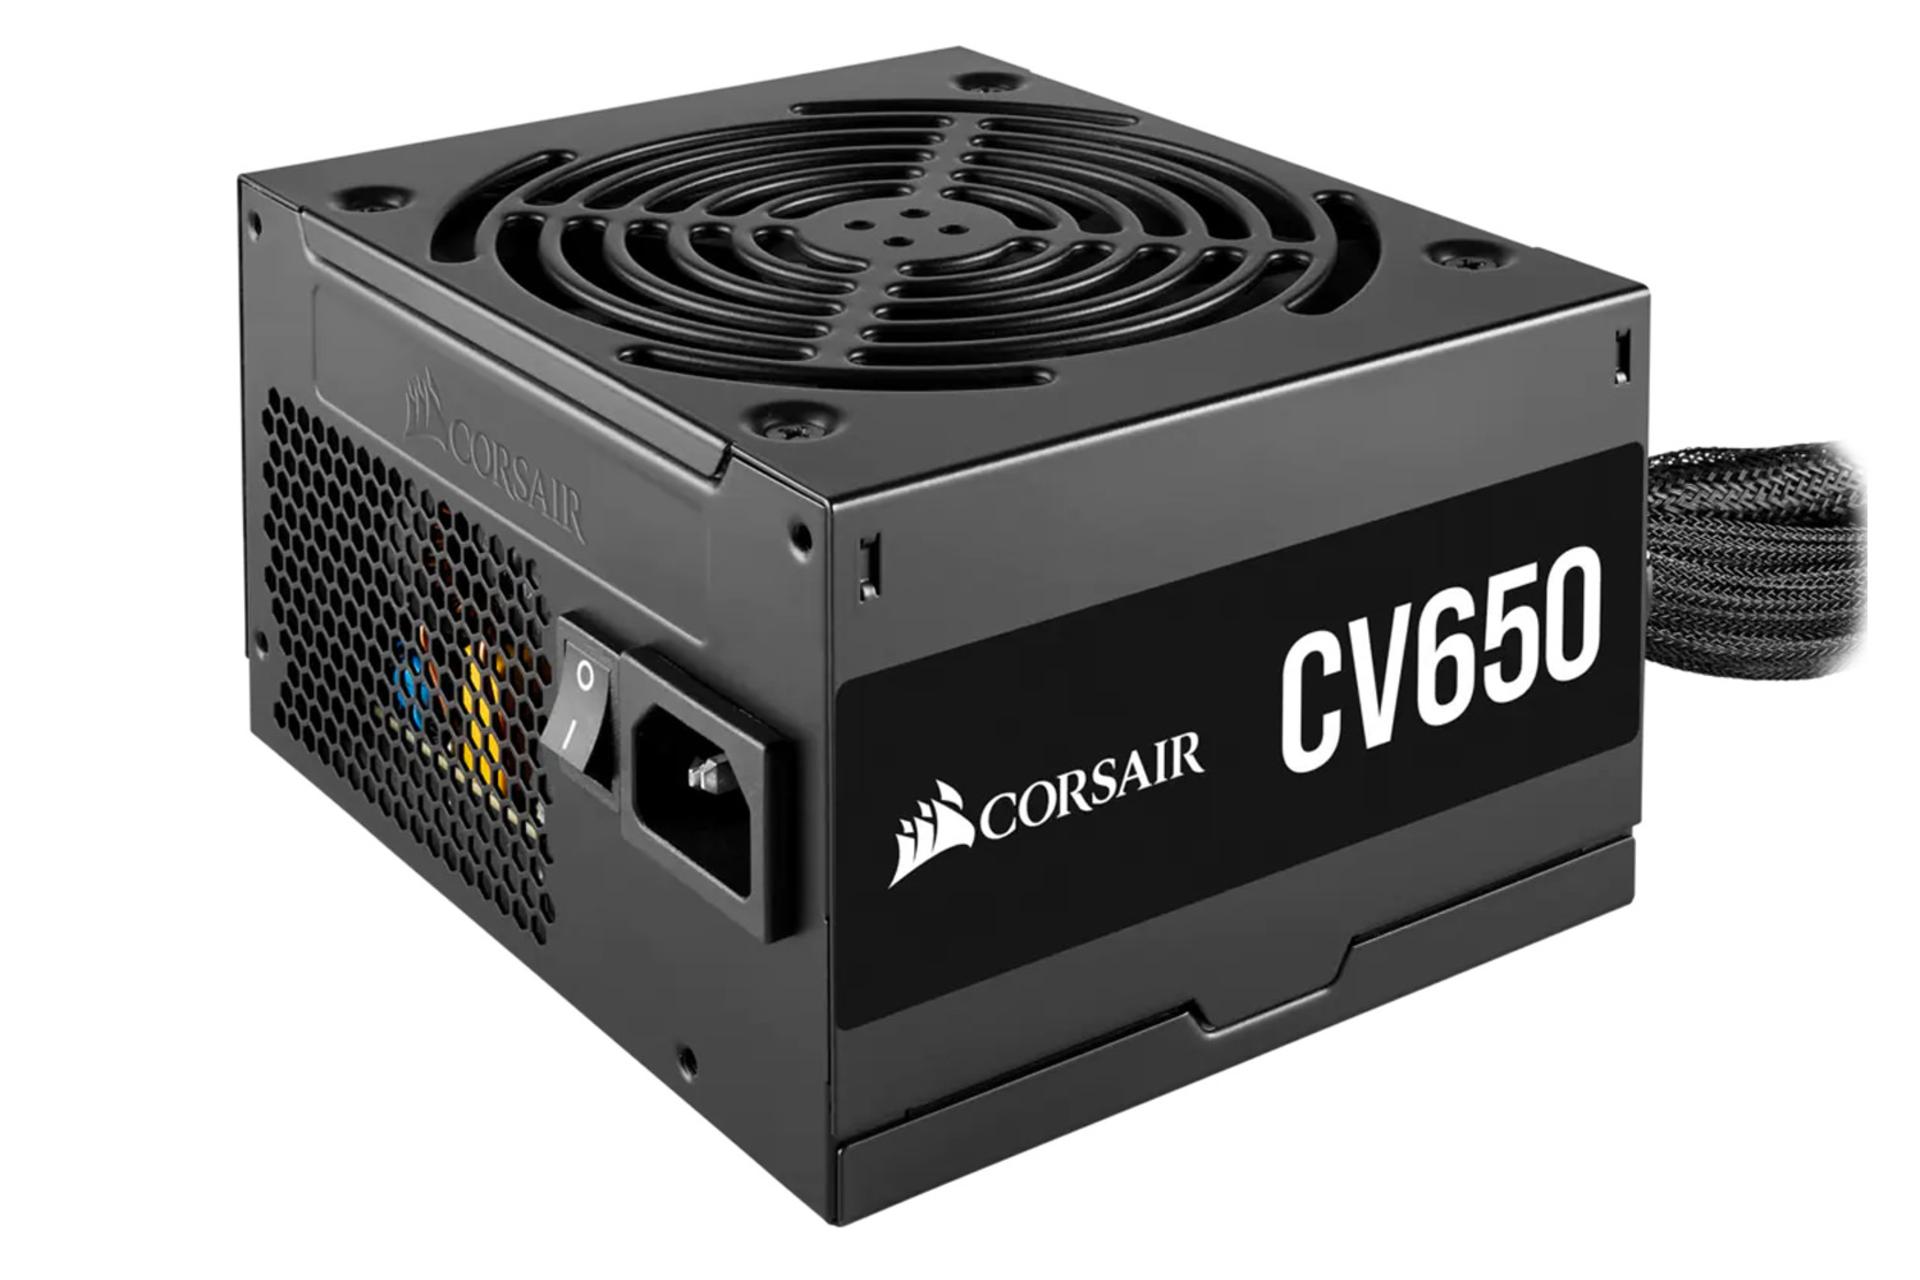 پاور کامپیوتر کورسیر CV650 CP-9020211 با توان 650 وات